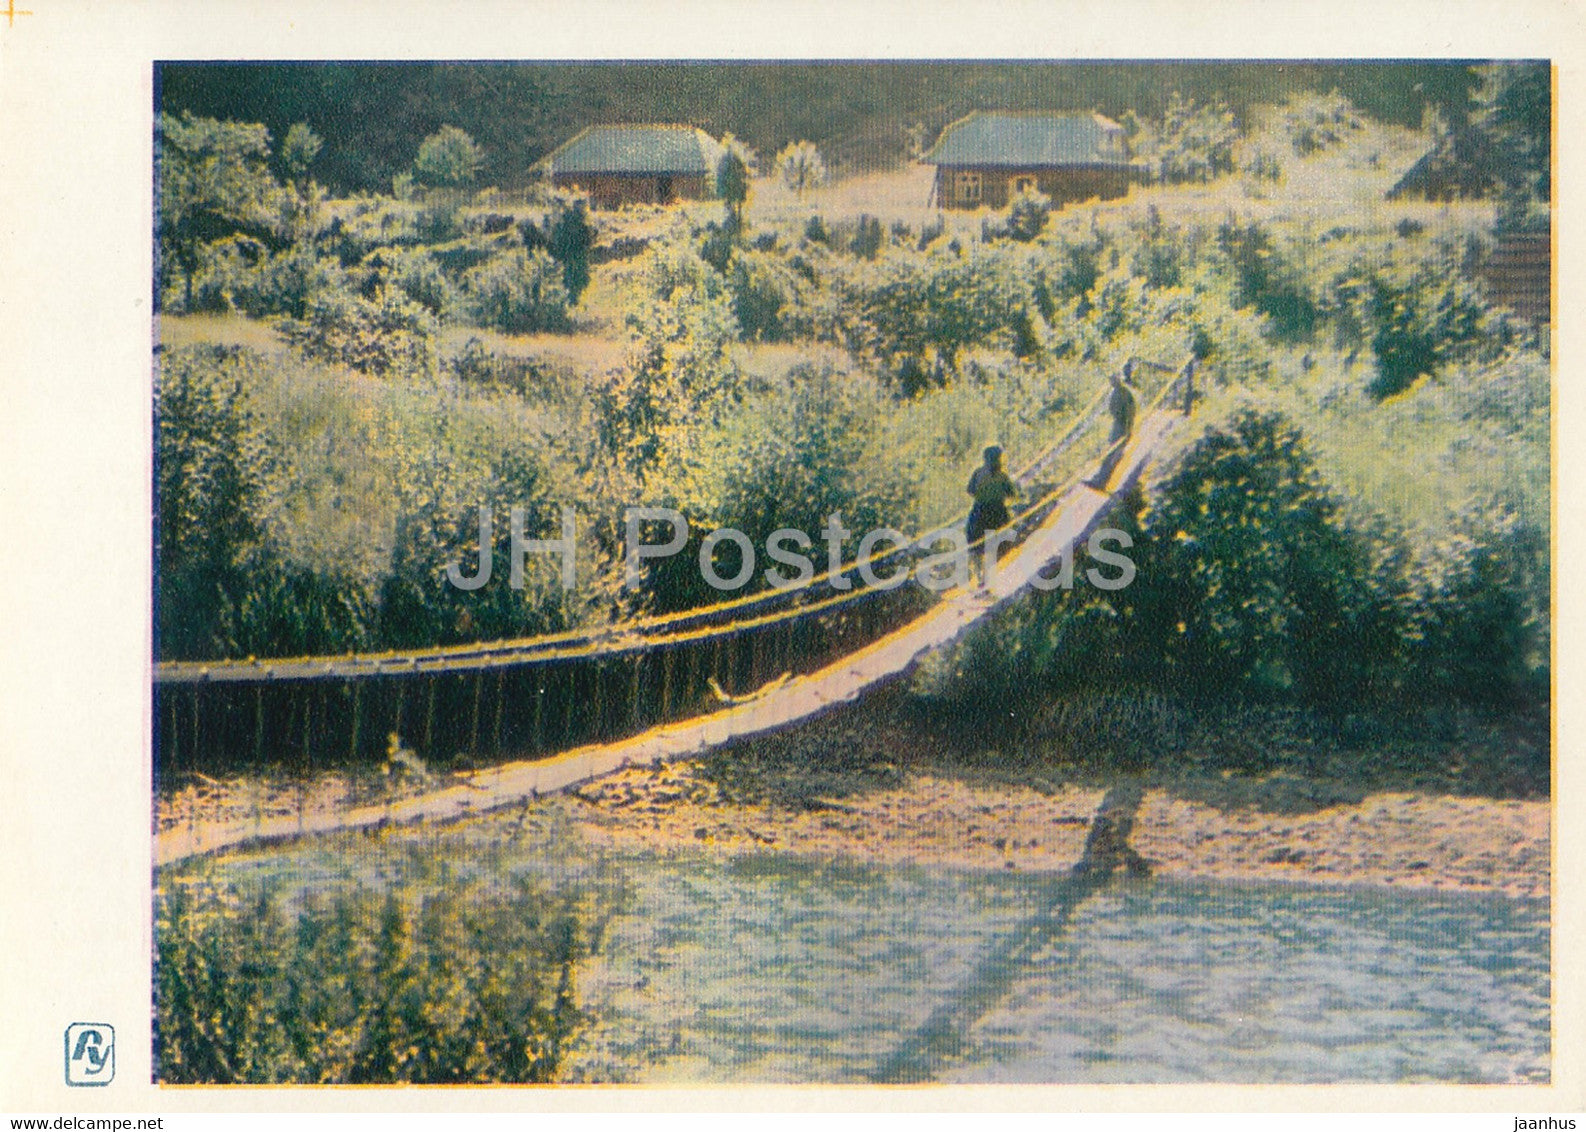 Carpathian Mountains - Karpaty - Bridge across the Tereblaya river - 1964 - Ukraine USSR - unused - JH Postcards